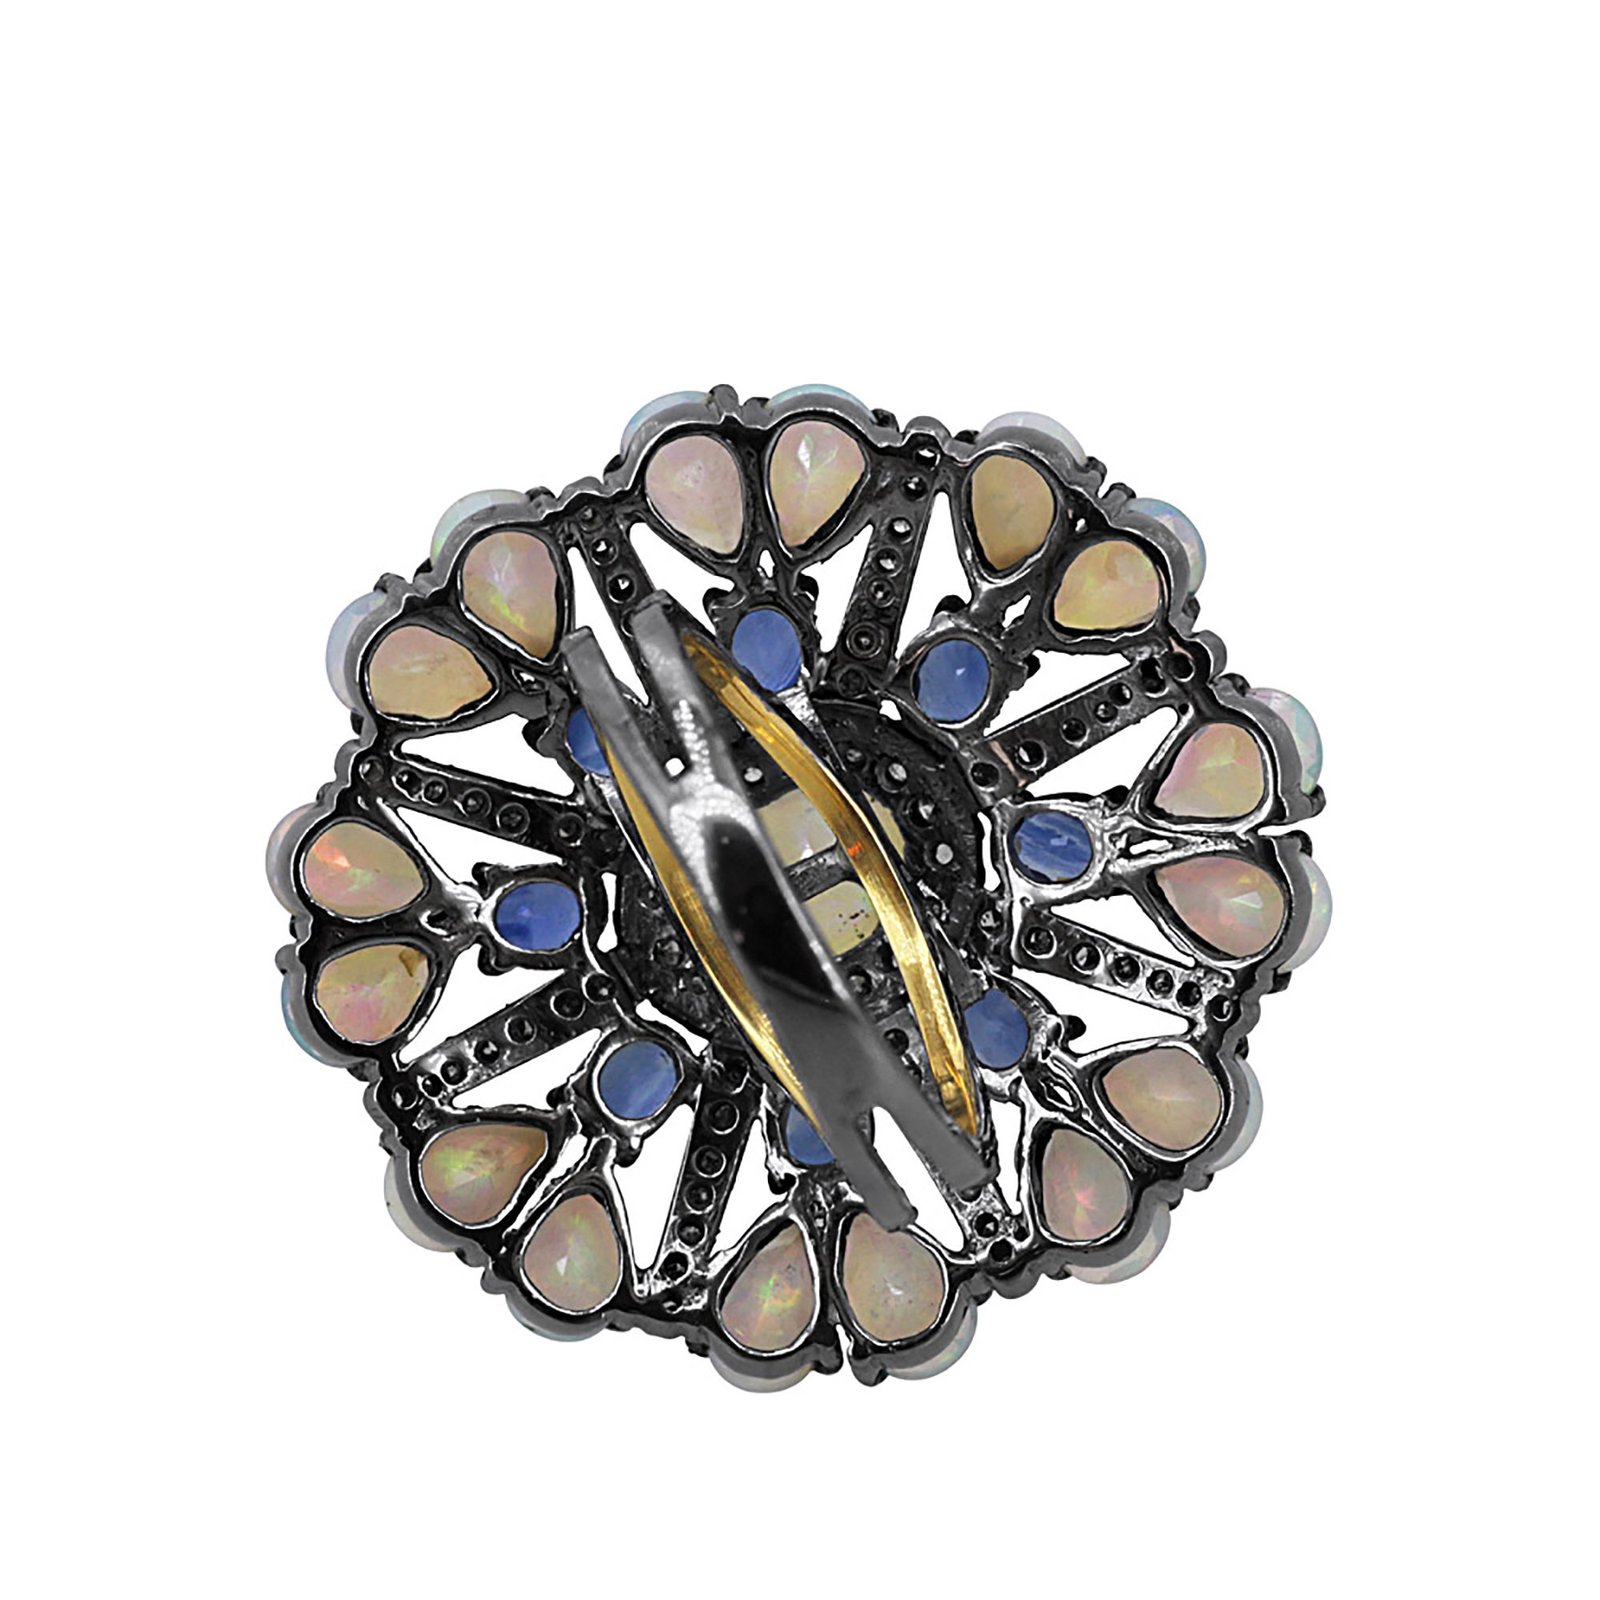 Blue sapphire & opal gemstone ring, 925 silver & 14k gold diamond jewelry